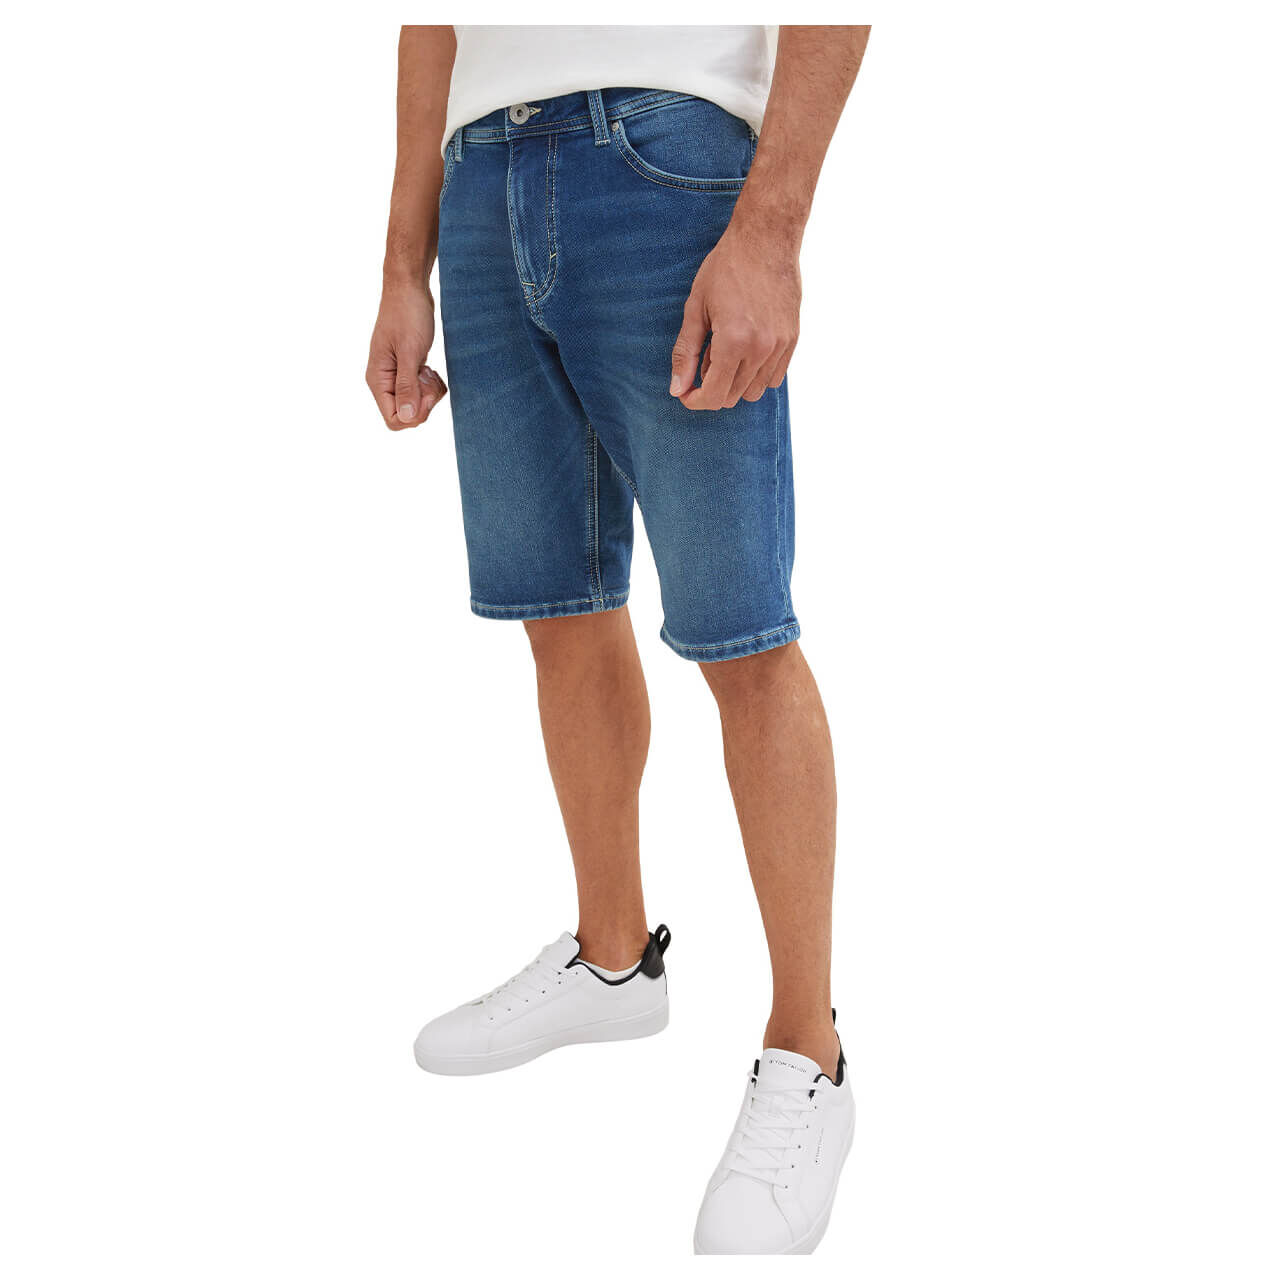 Tom Tailor Jeans Josh Shorts tinted blue denim